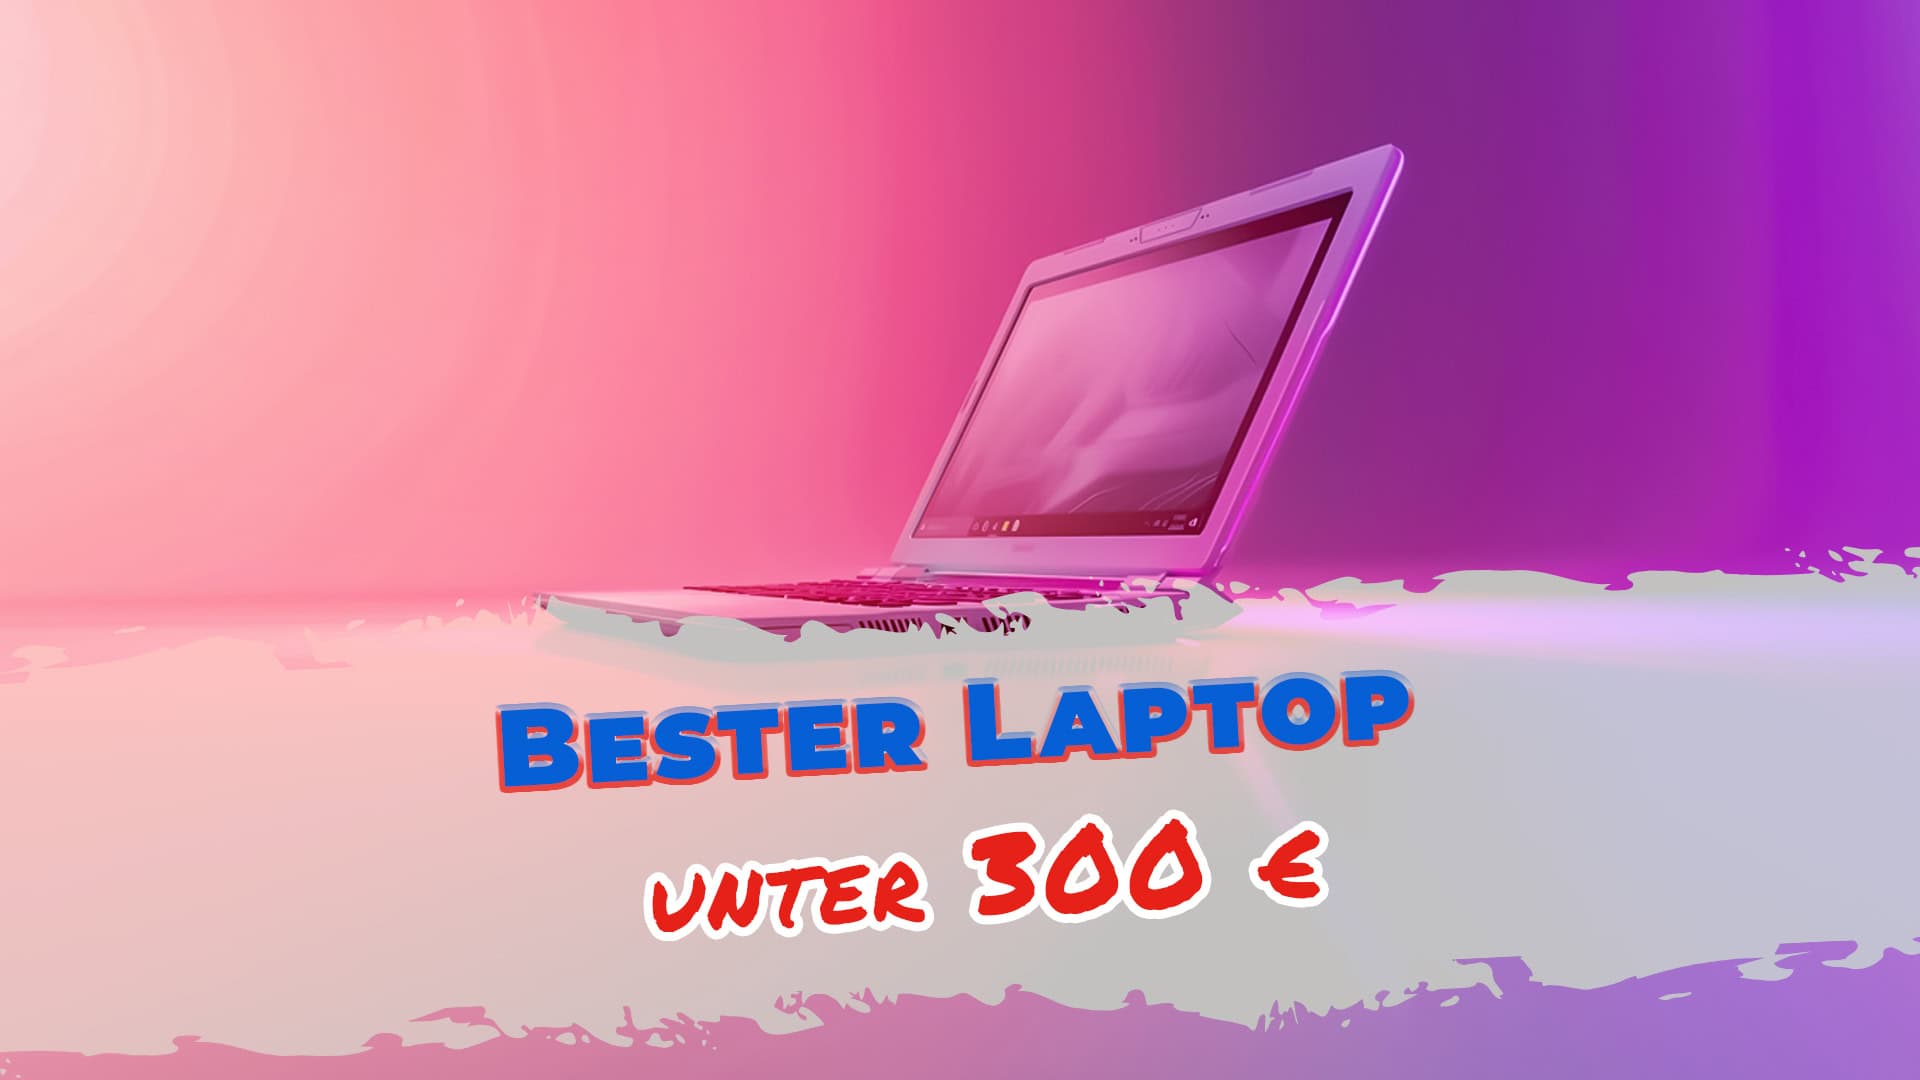 Bester Laptop unter 300 Euro